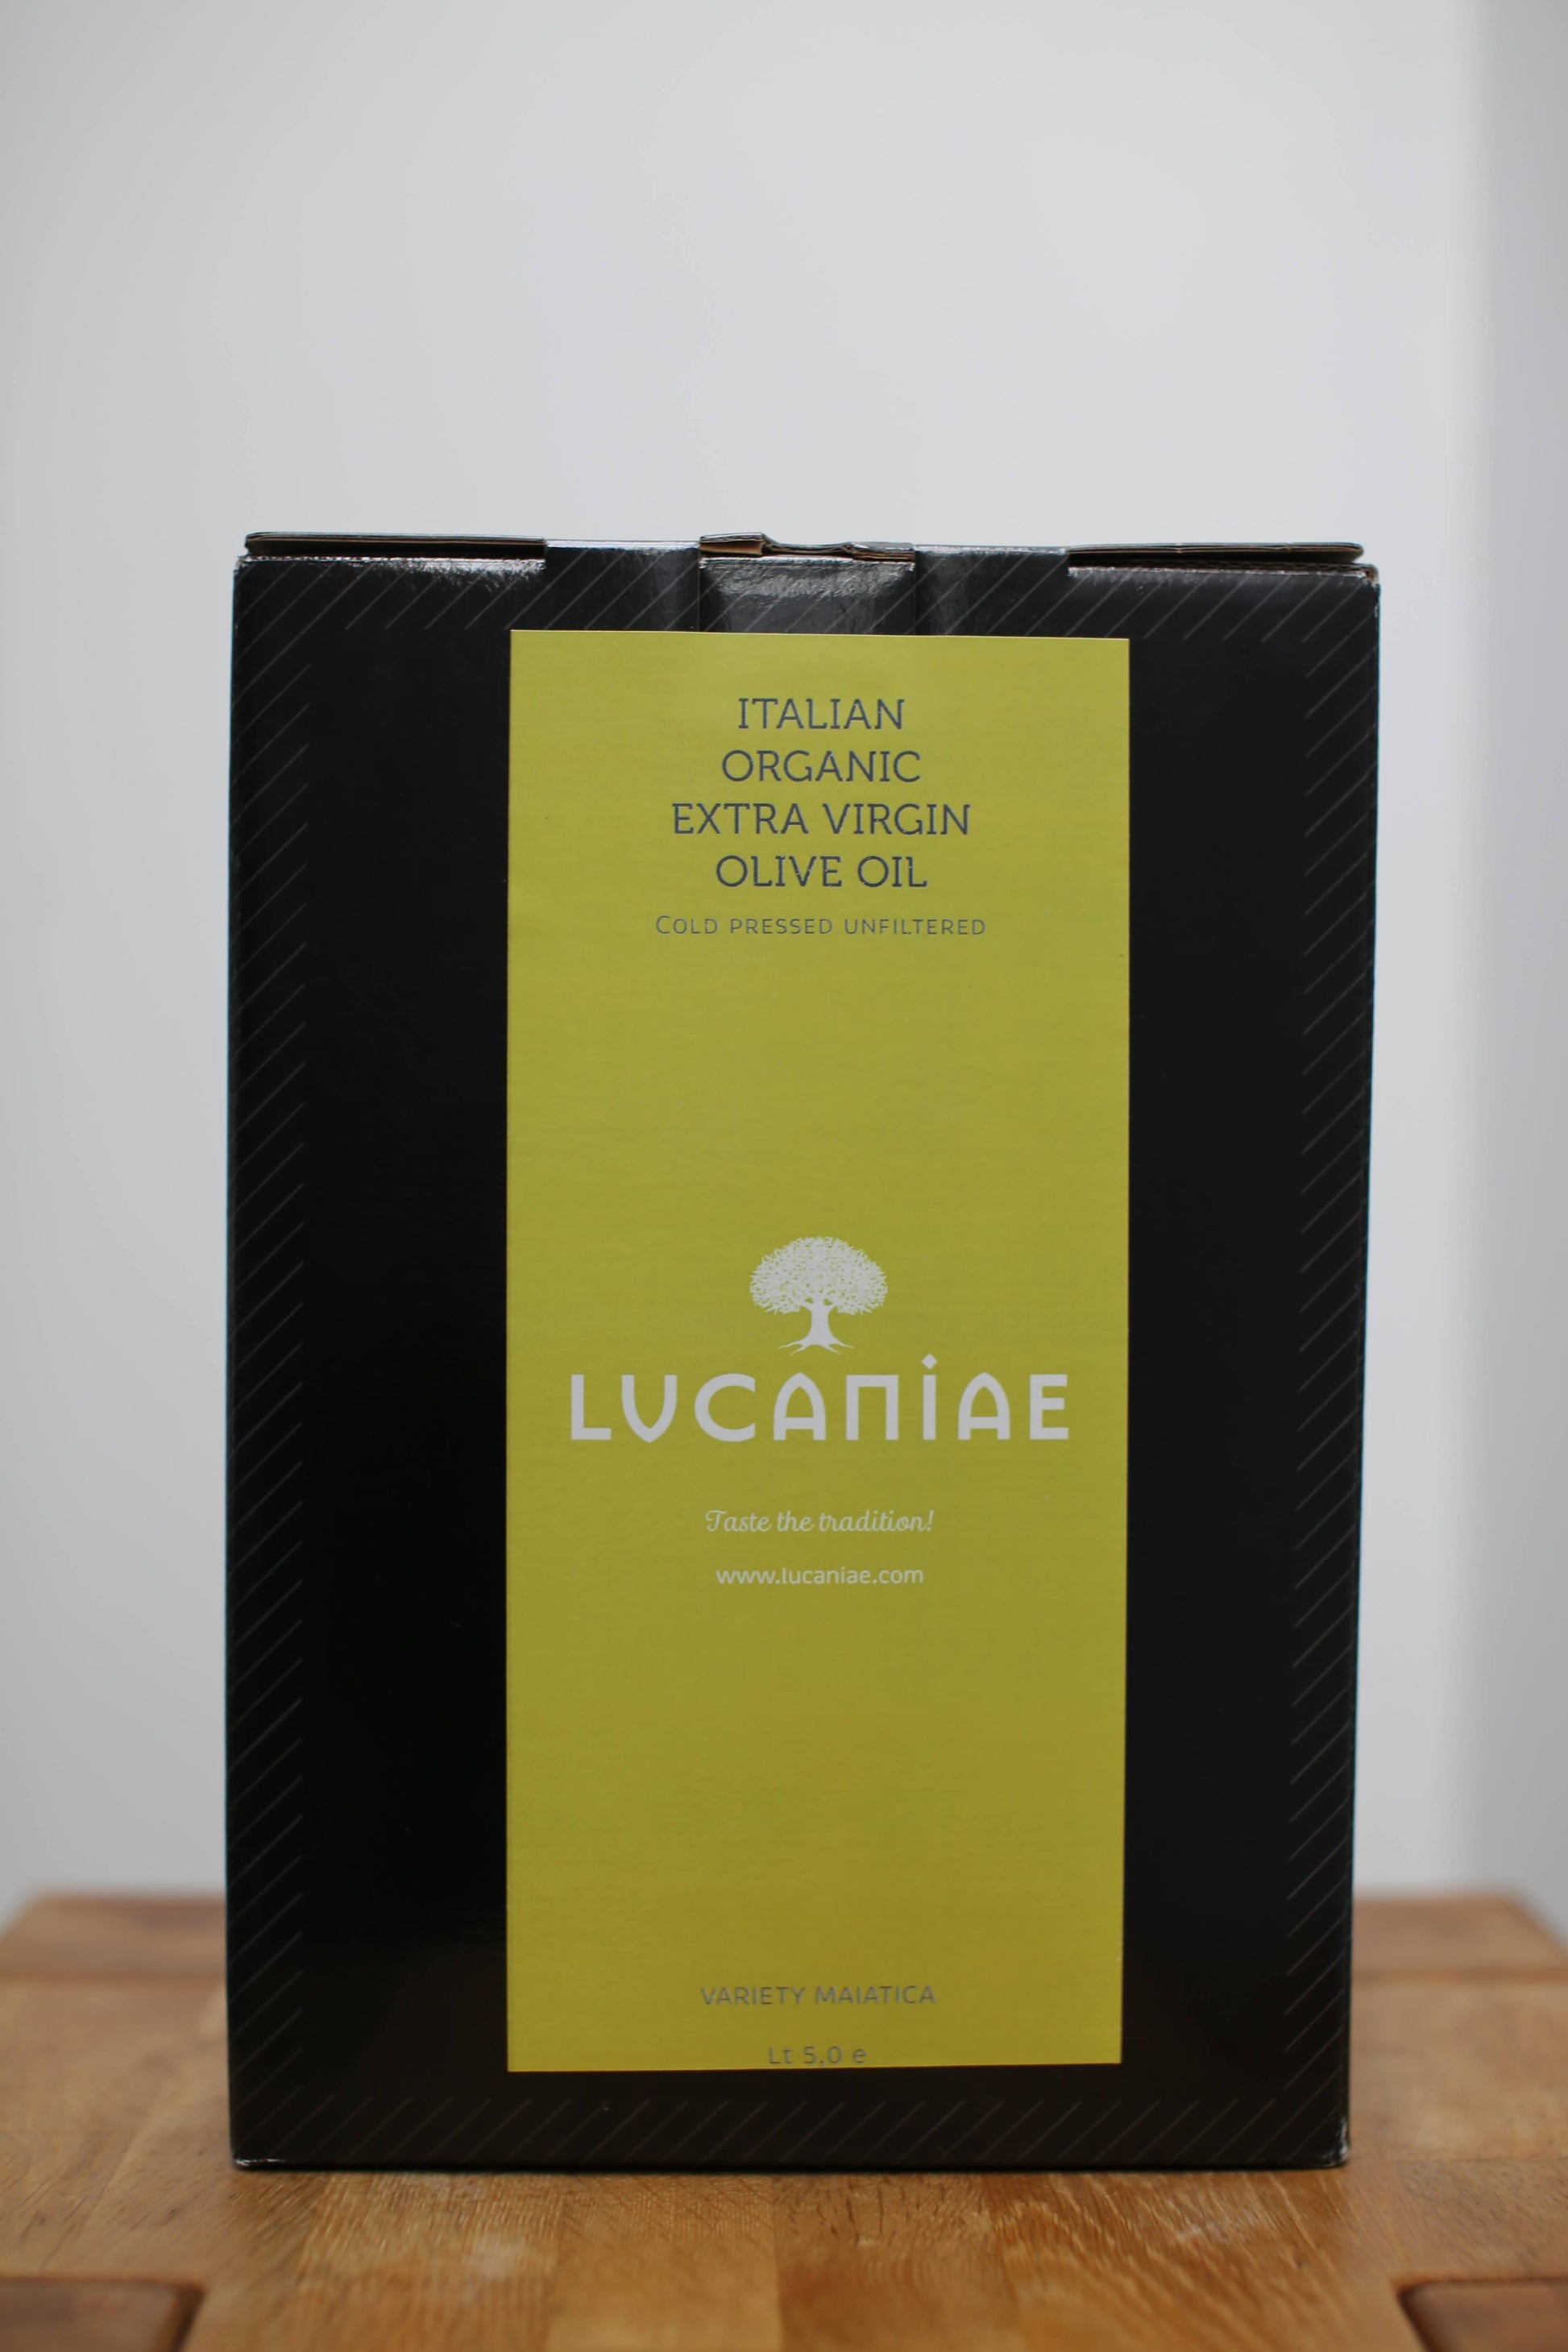 Lucaniae extra virgin olive oil 5.0 liters bag-in-box